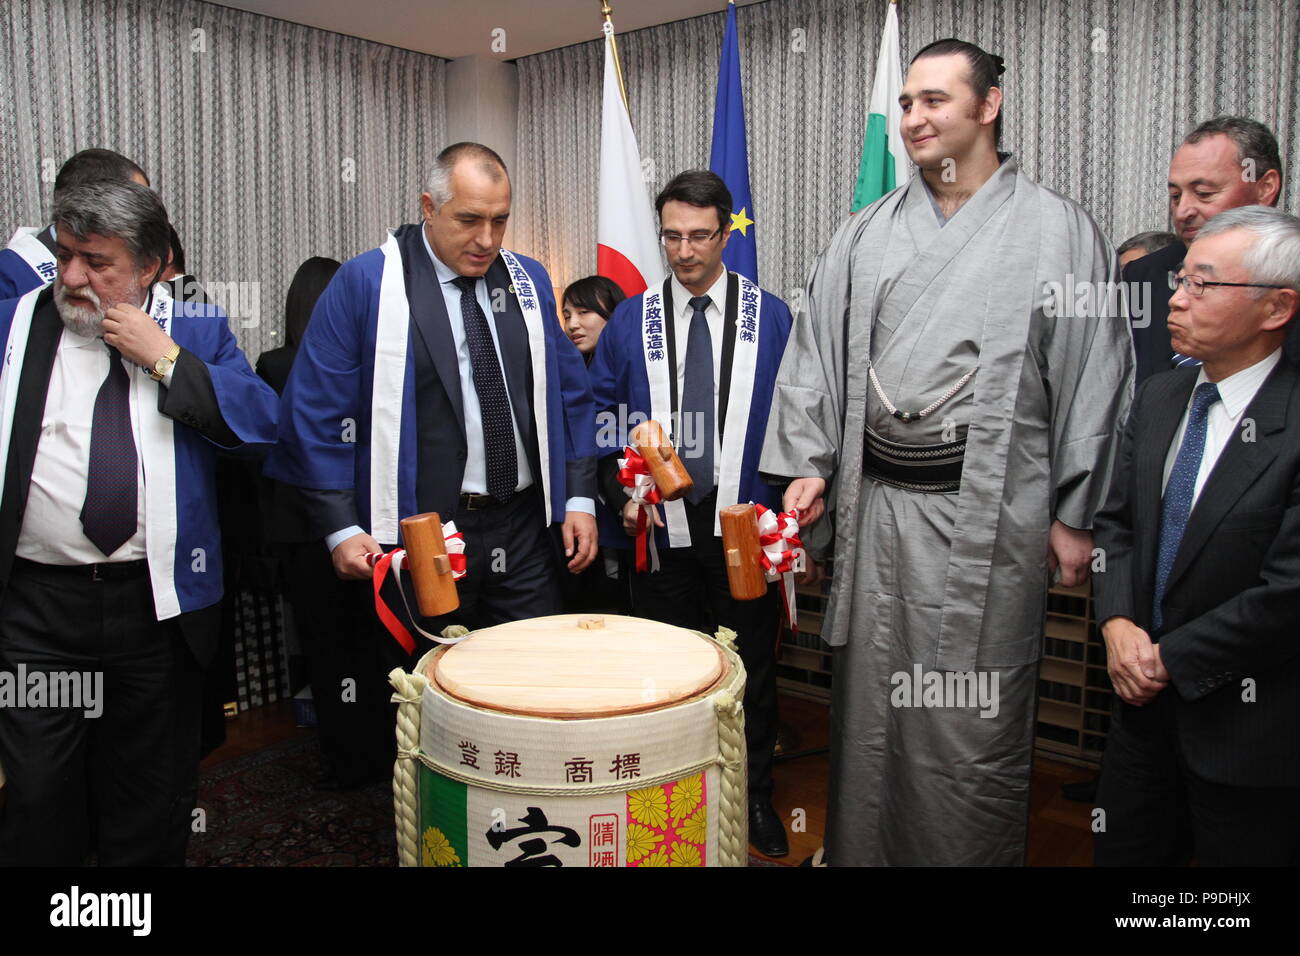 Kotoōshū Katsunori with original name Kaloyan Mahlyanov is a sumo wrestler or rikishi t with Bulgarian prime minister Boyko Borisov on a ceremony kaga Stock Photo